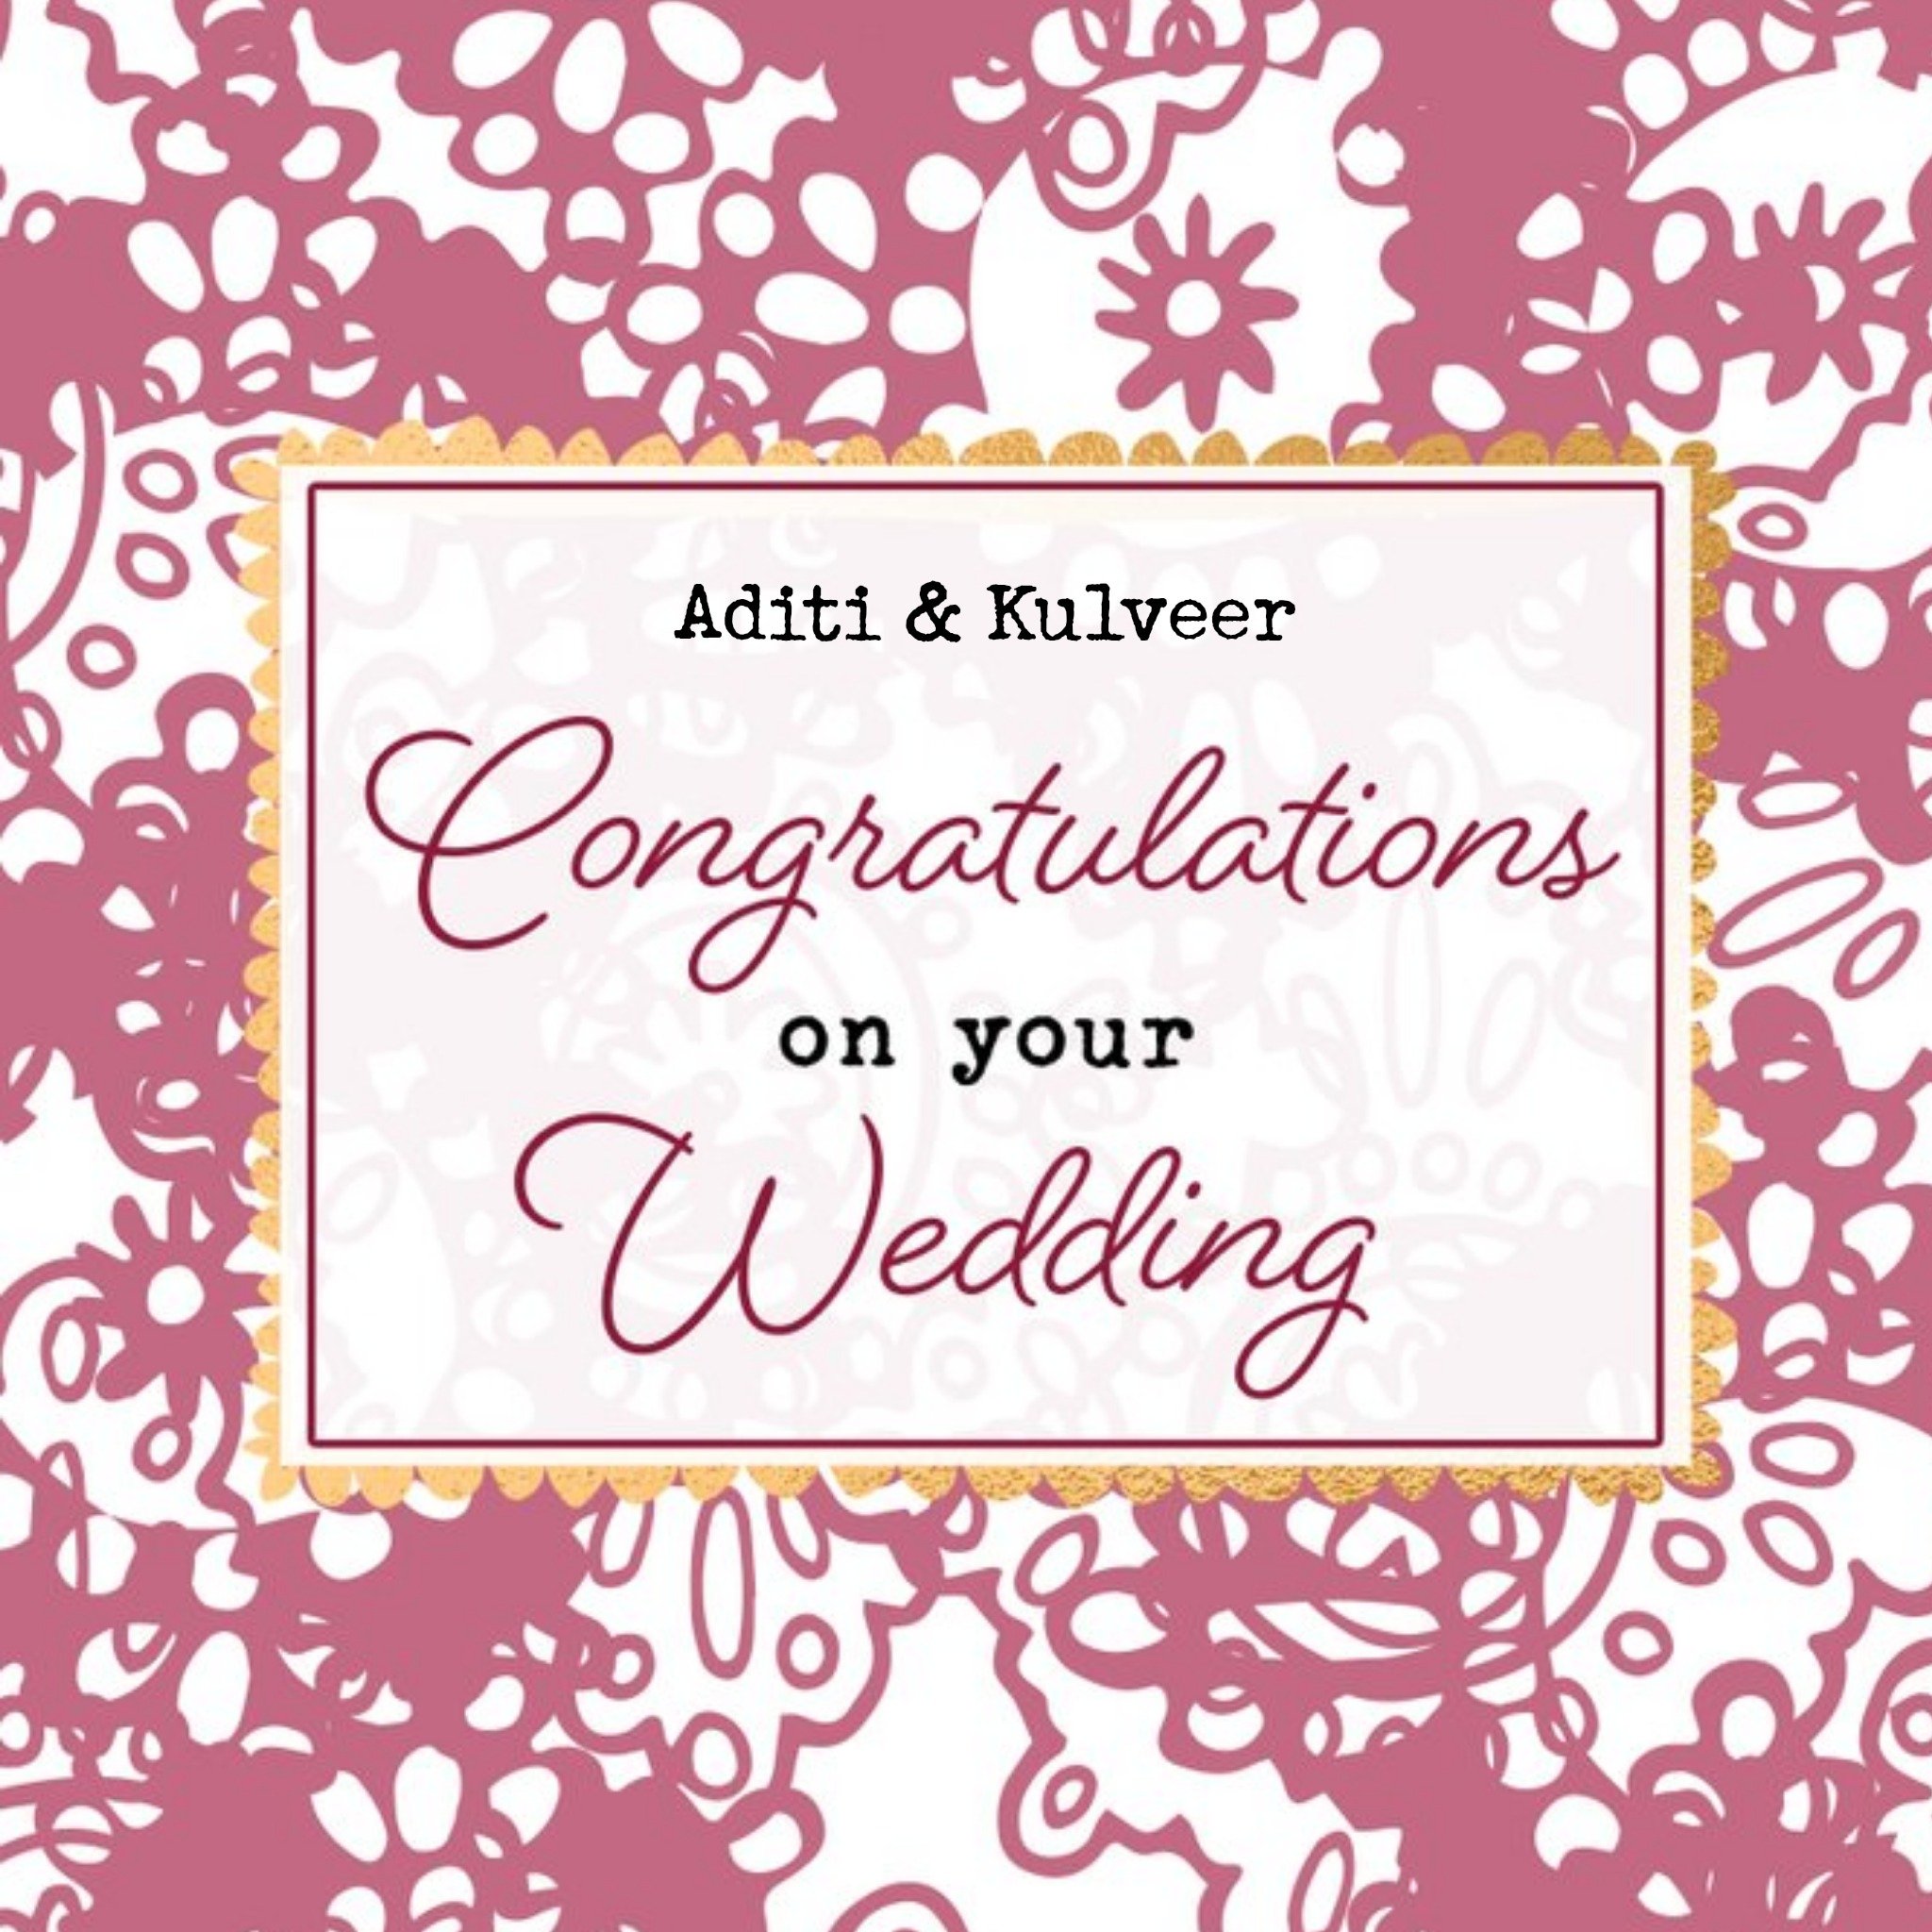 Moonpig Wedding Card - Congratulations On Your Wedding Day - Indian Wedding, Large